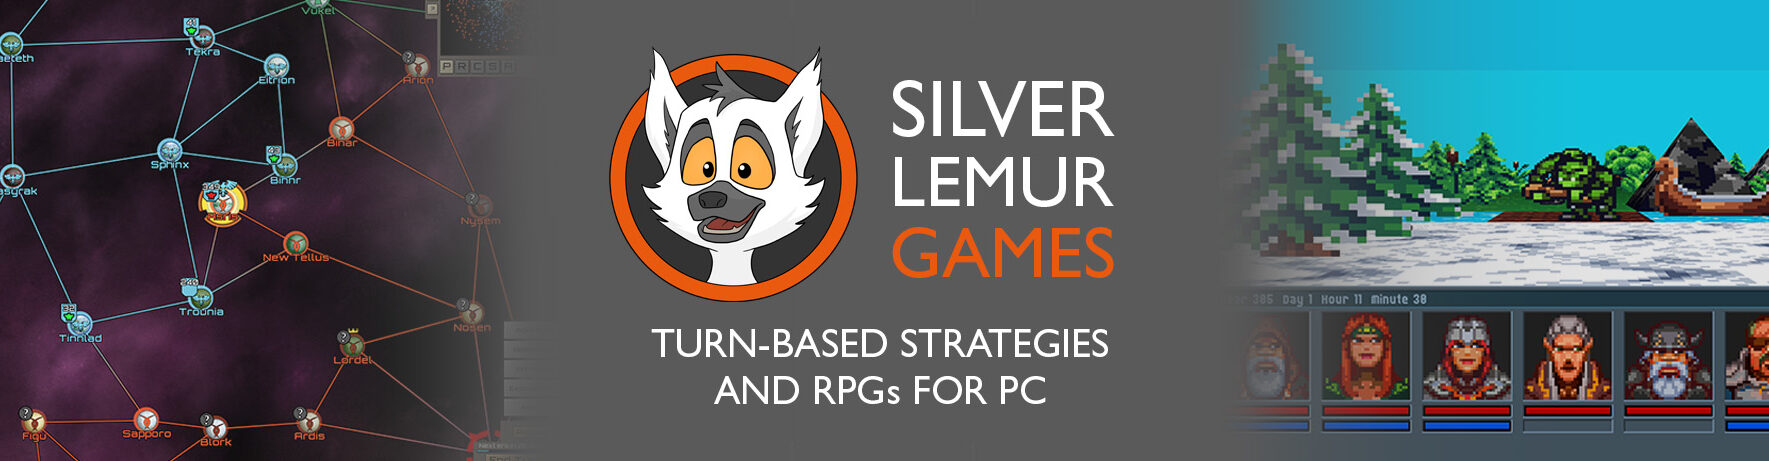 Silver Lemur Games